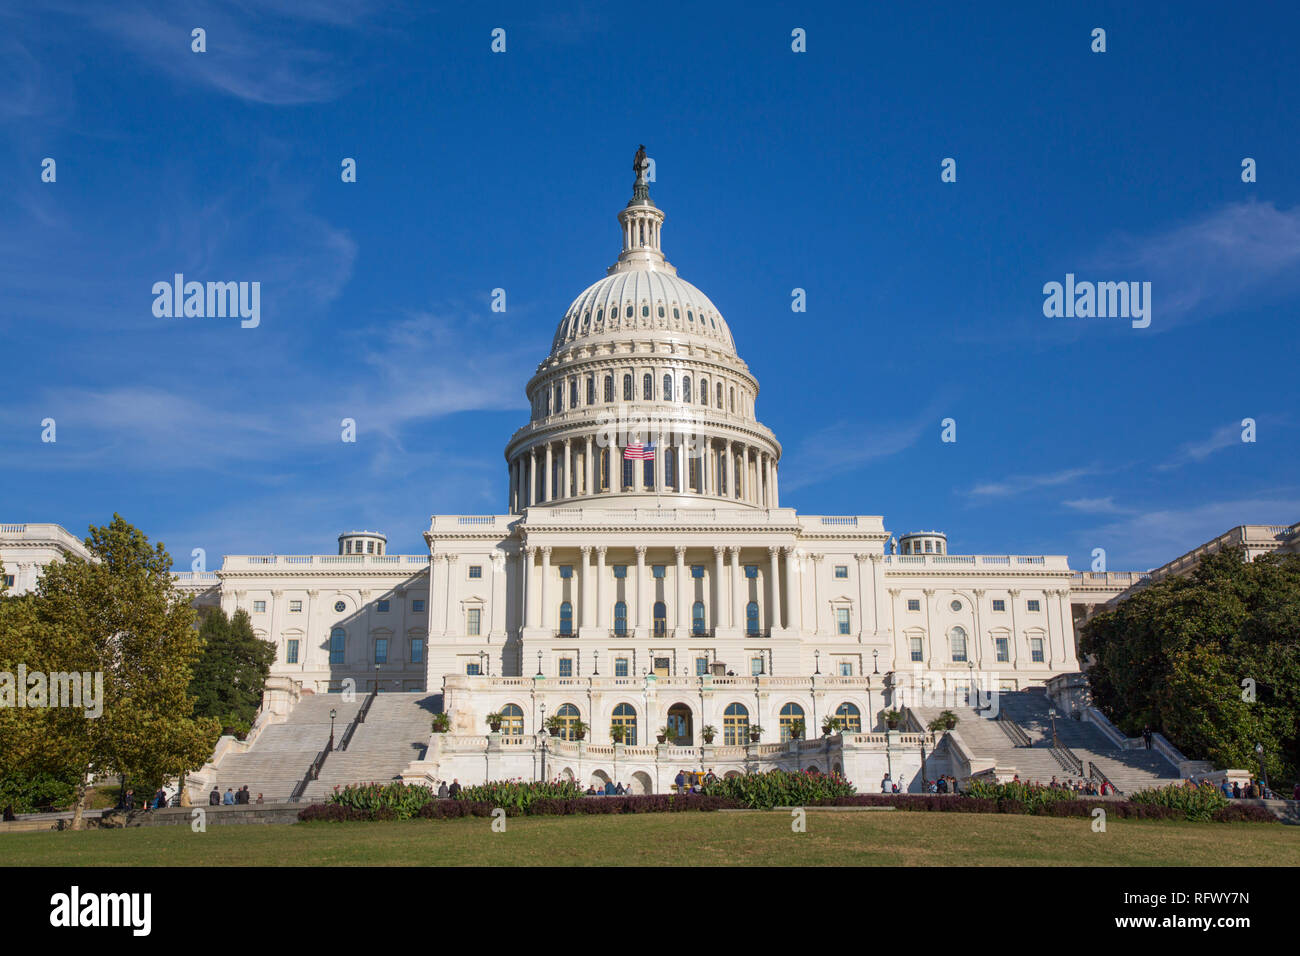 United States Capitol Building, Washington D.C., United States of America, North America Stock Photo